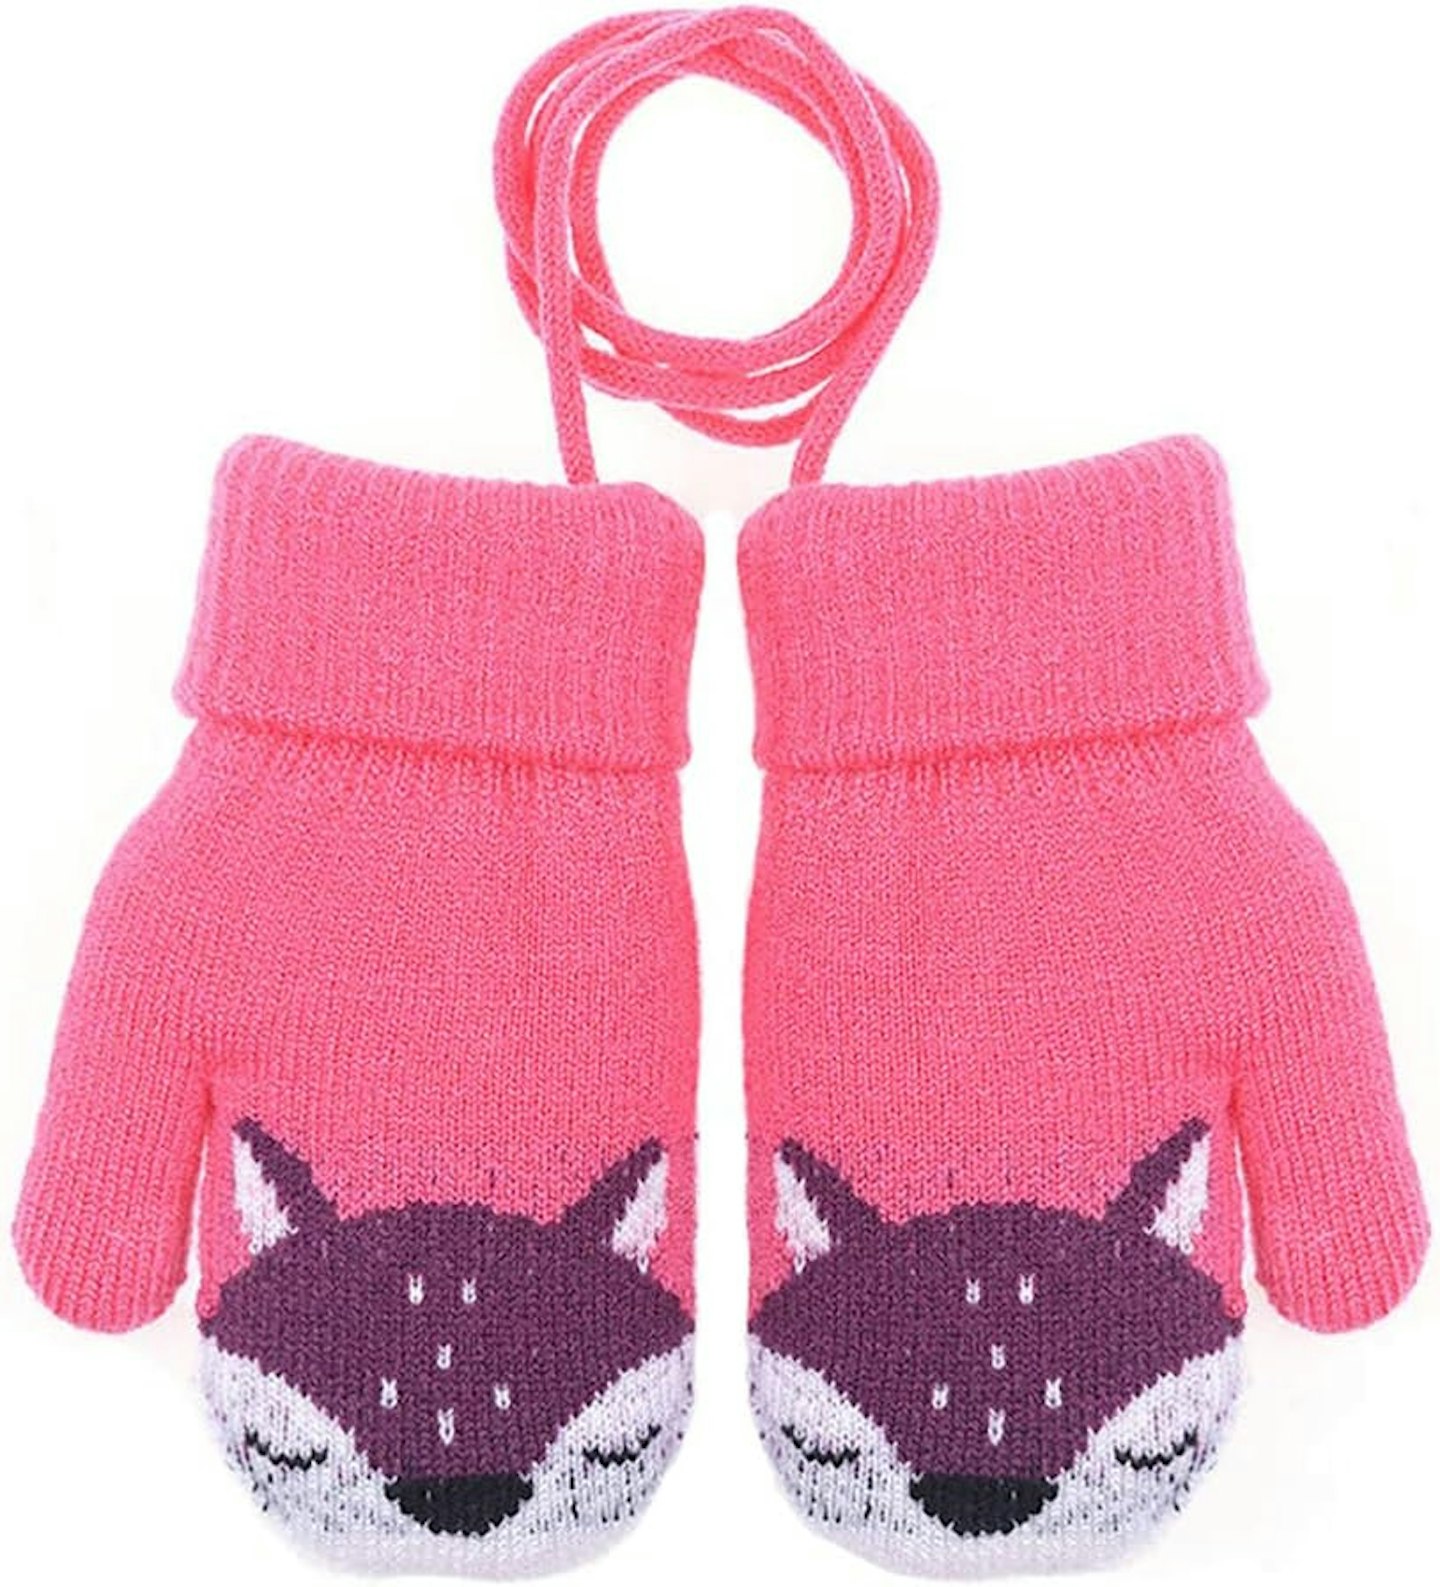 Pink fox design mittens for babies 